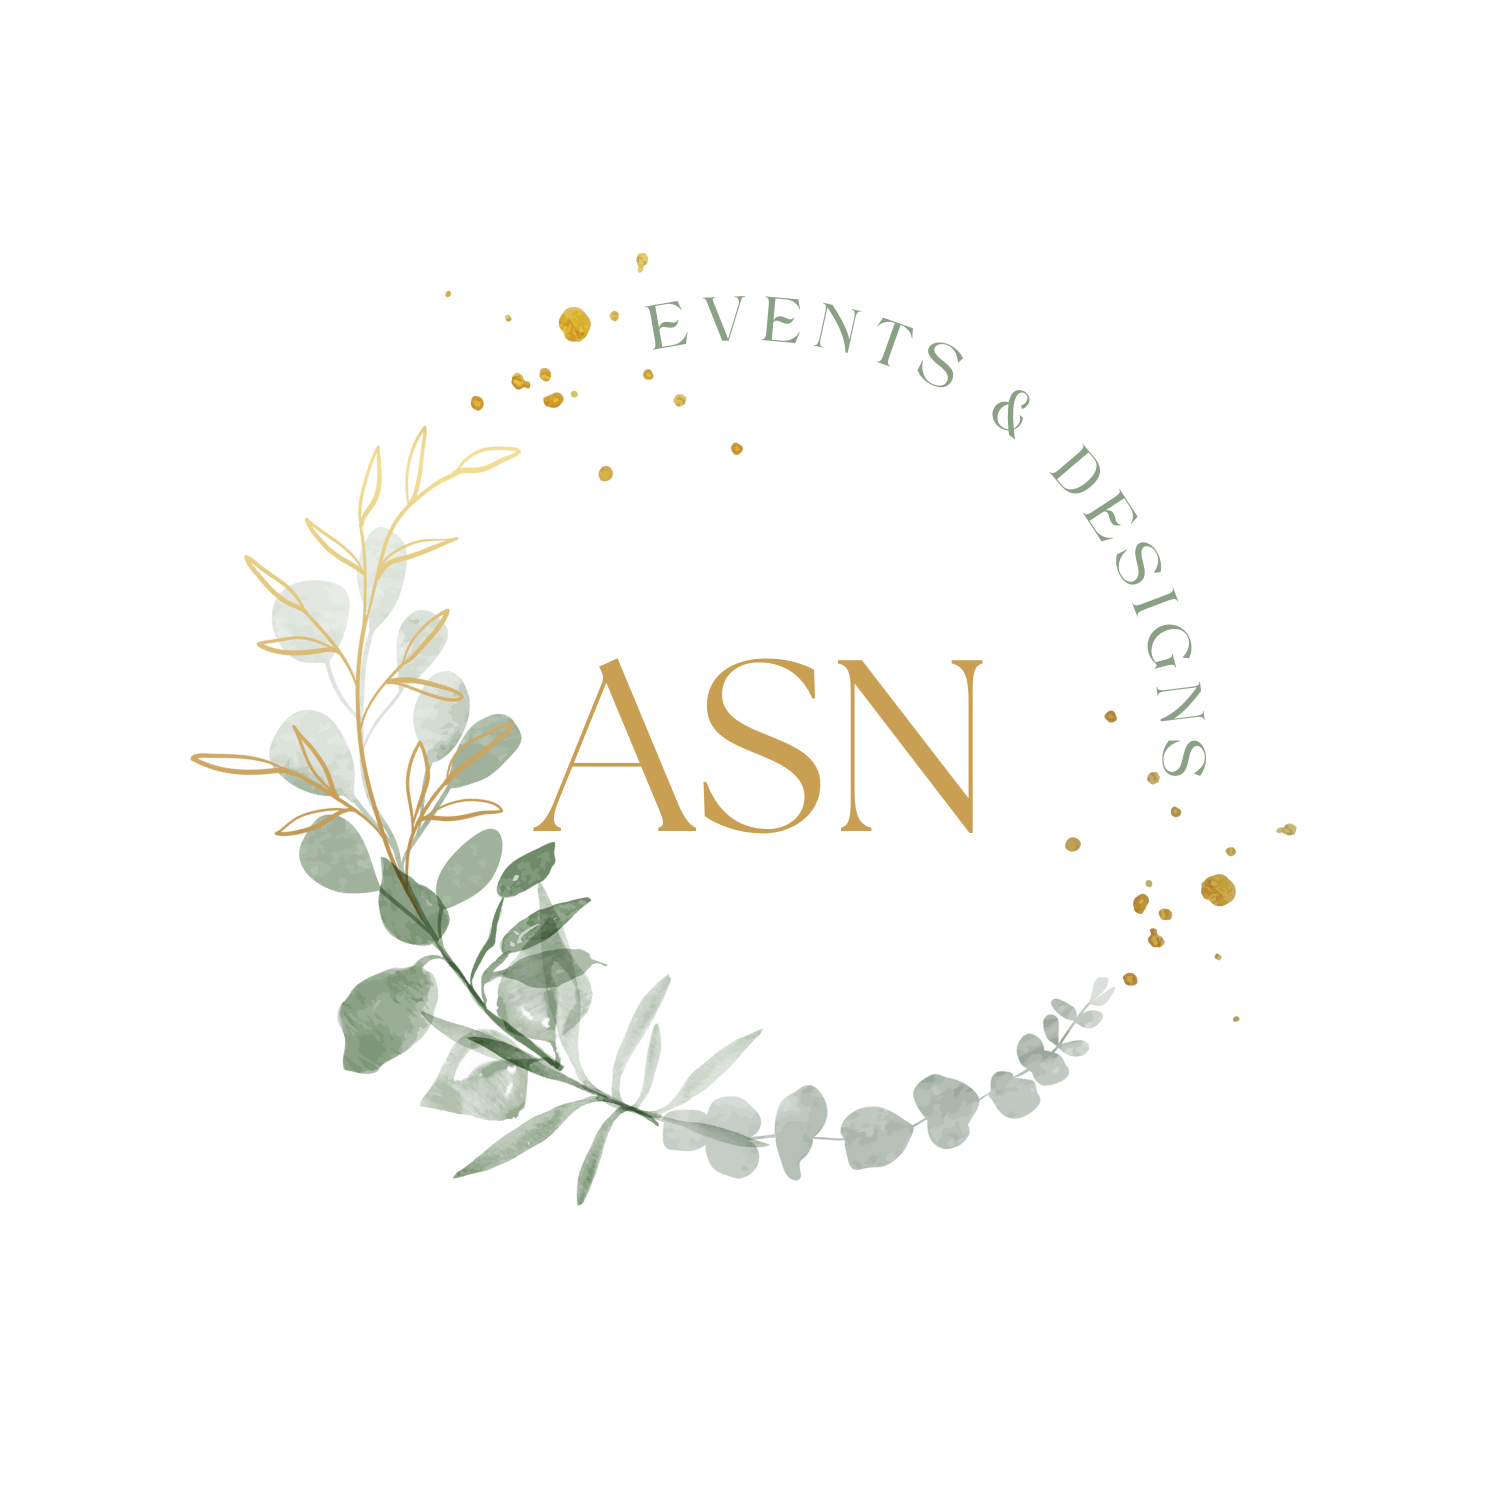 ASN Events